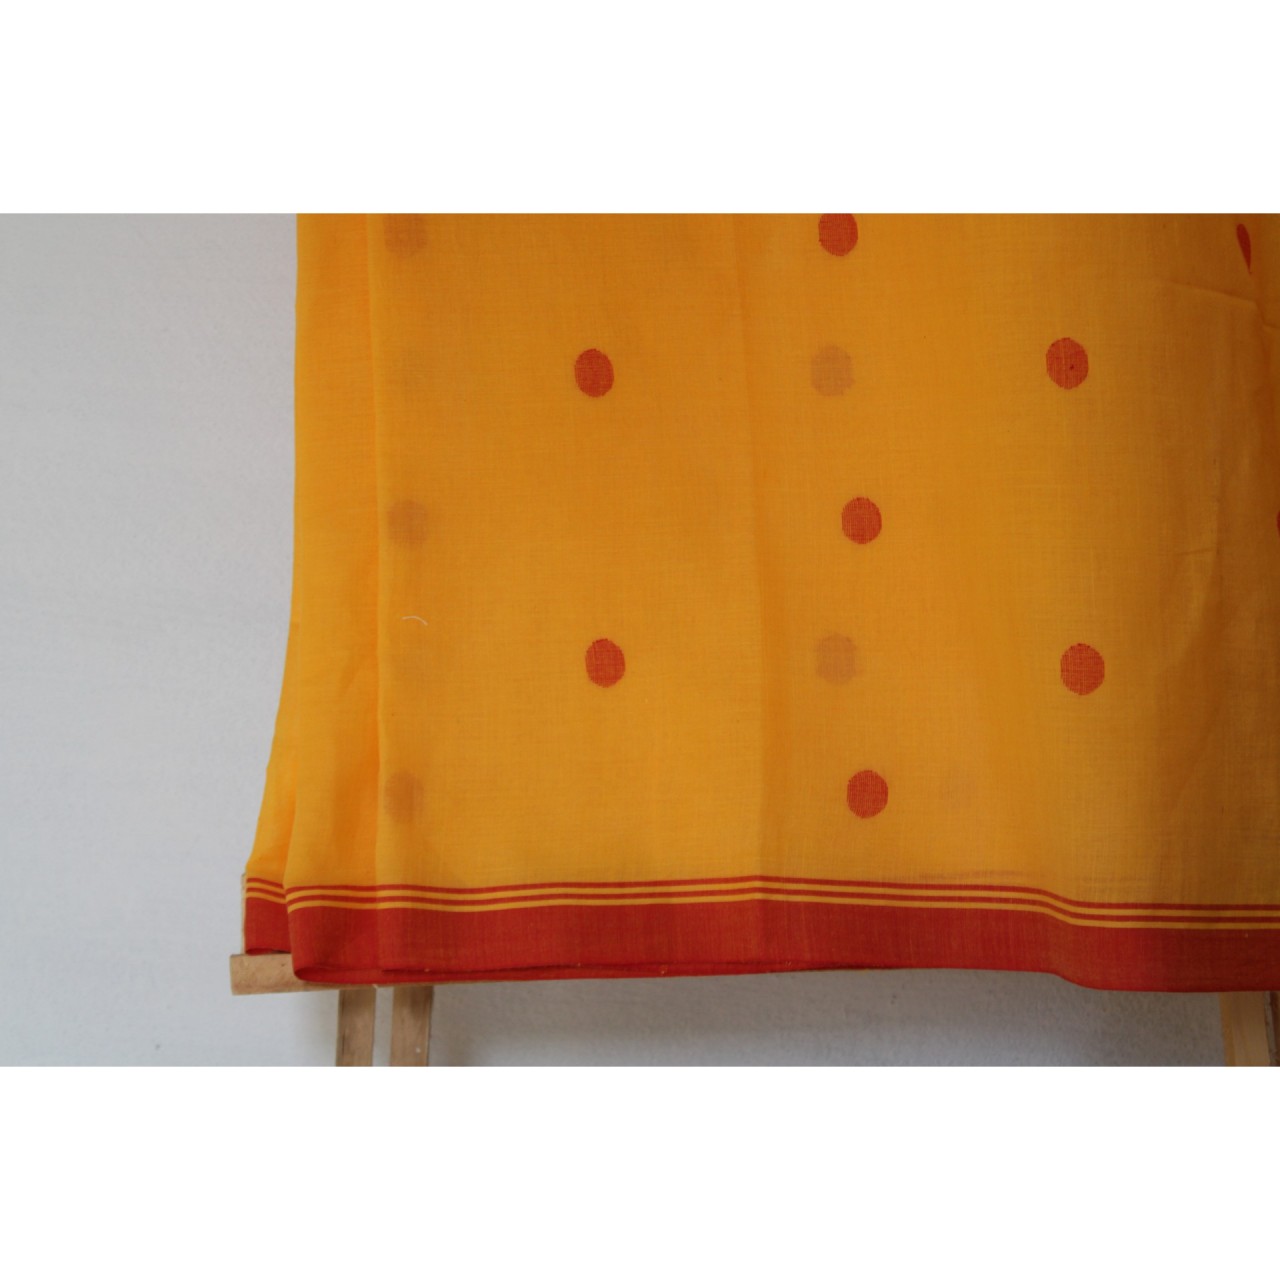 (1154) Cotton Azo-free dyed Jamdani sari from Burdwan with cotton motifs - Mustard yellow, red